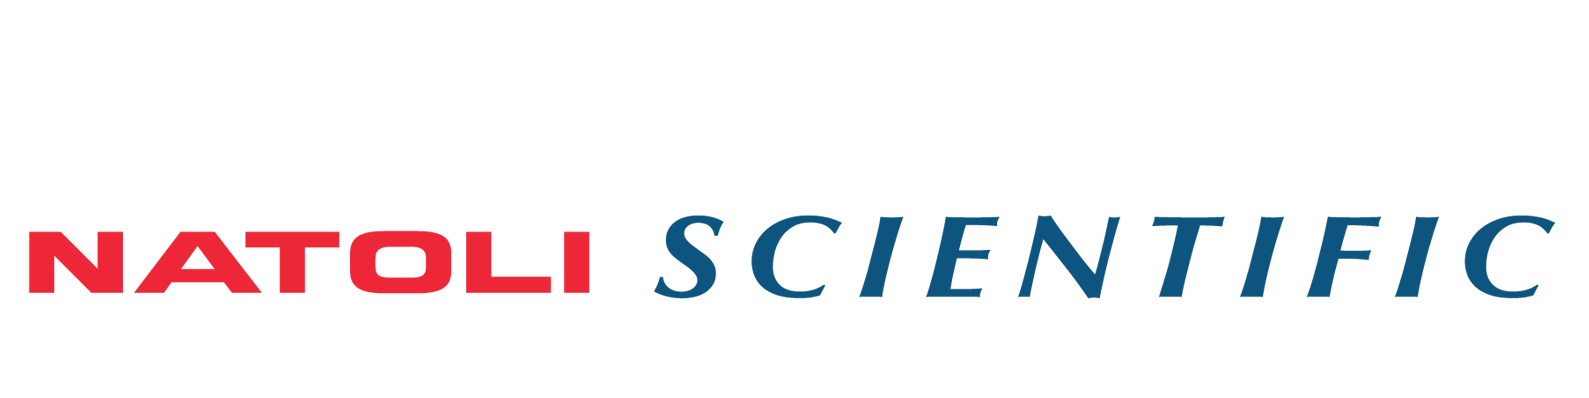 Natoli Scientific Analytical & Formulation Services